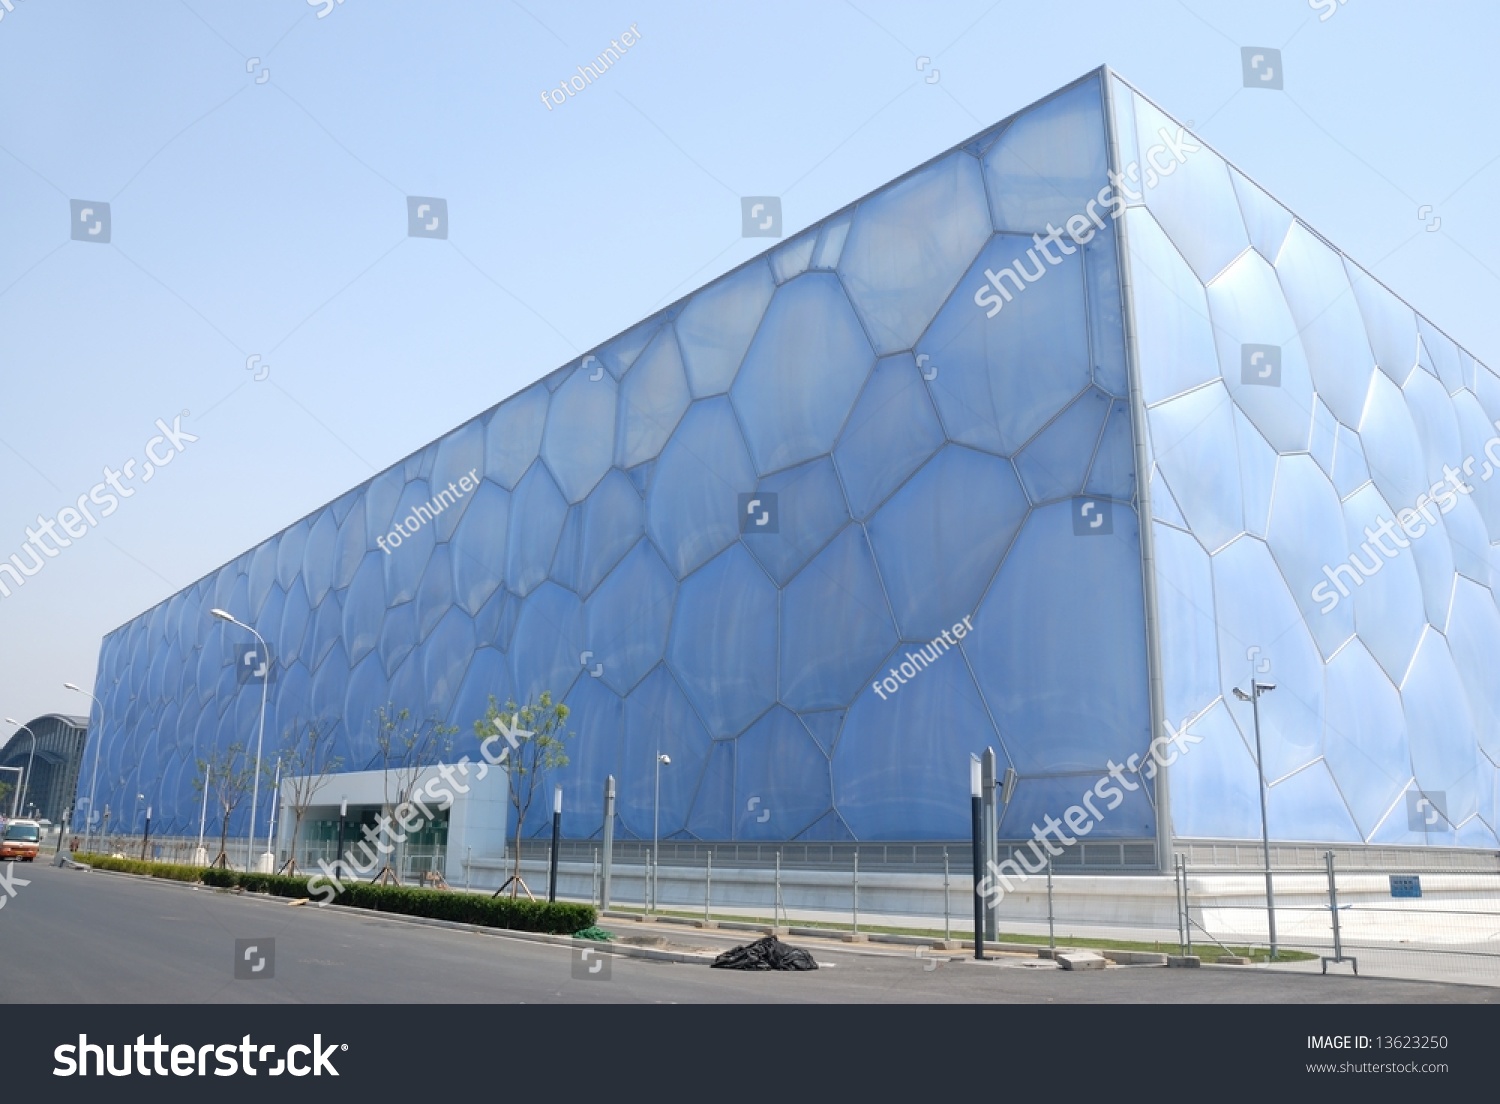 swimming stadium "watercube" for Beijing 2008 olympic games #13623250